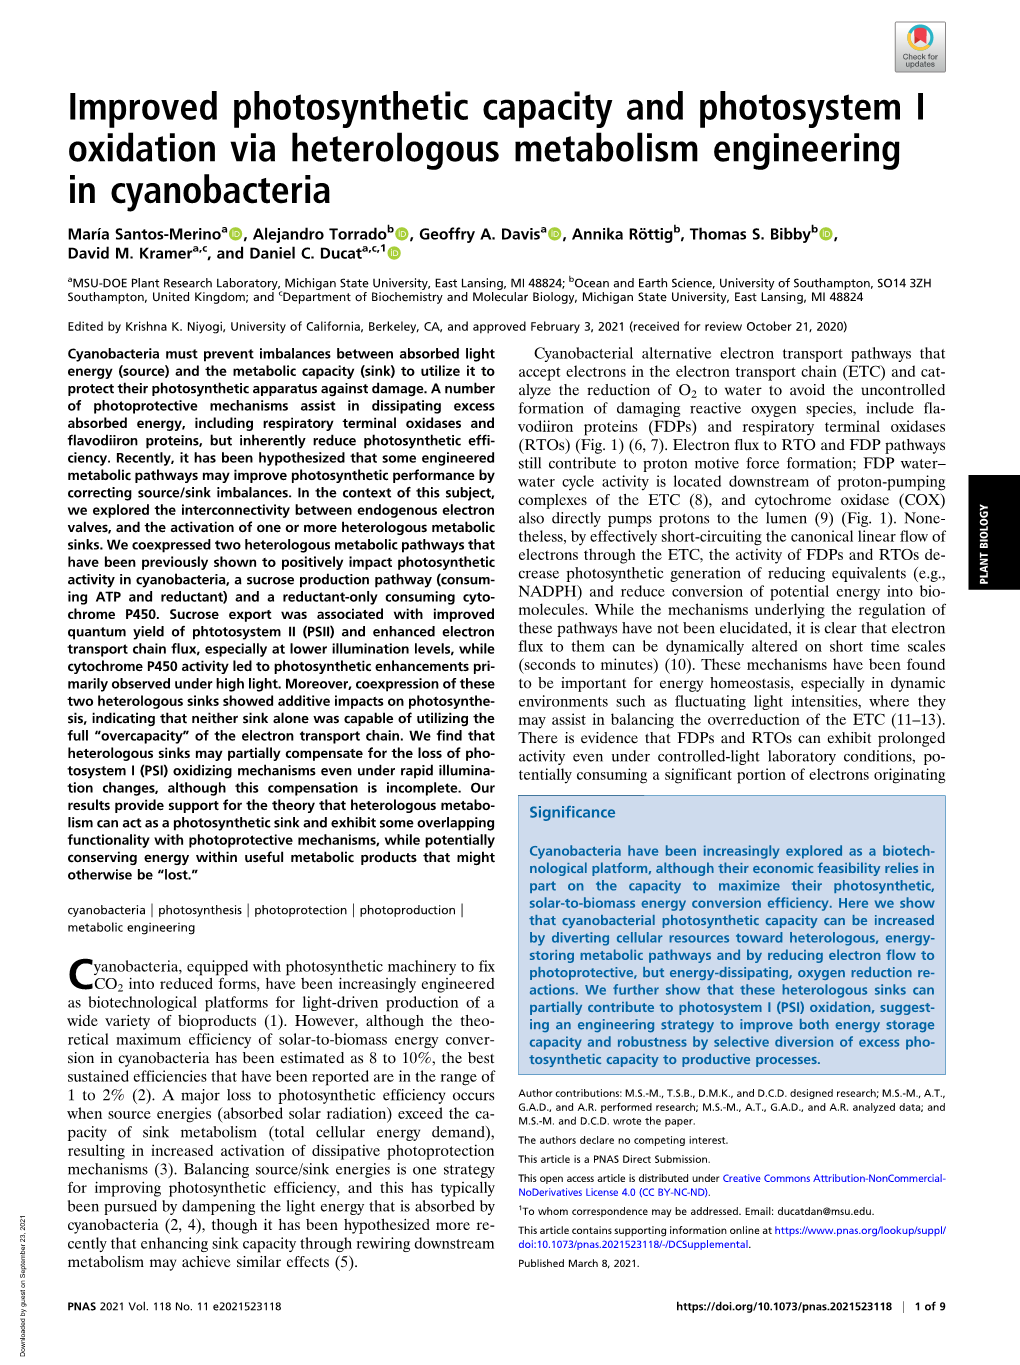 Improved Photosynthetic Capacity and Photosystem I Oxidation Via Heterologous Metabolism Engineering in Cyanobacteria